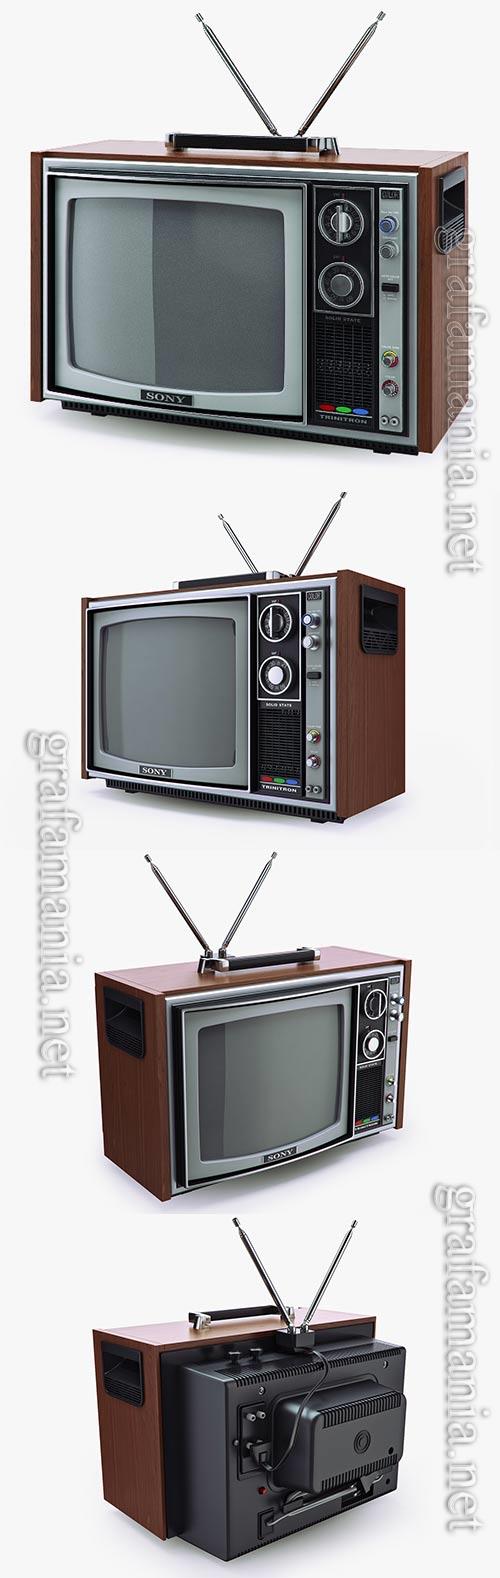 Old TV - Sony trinitron kv 1300e 3D Model